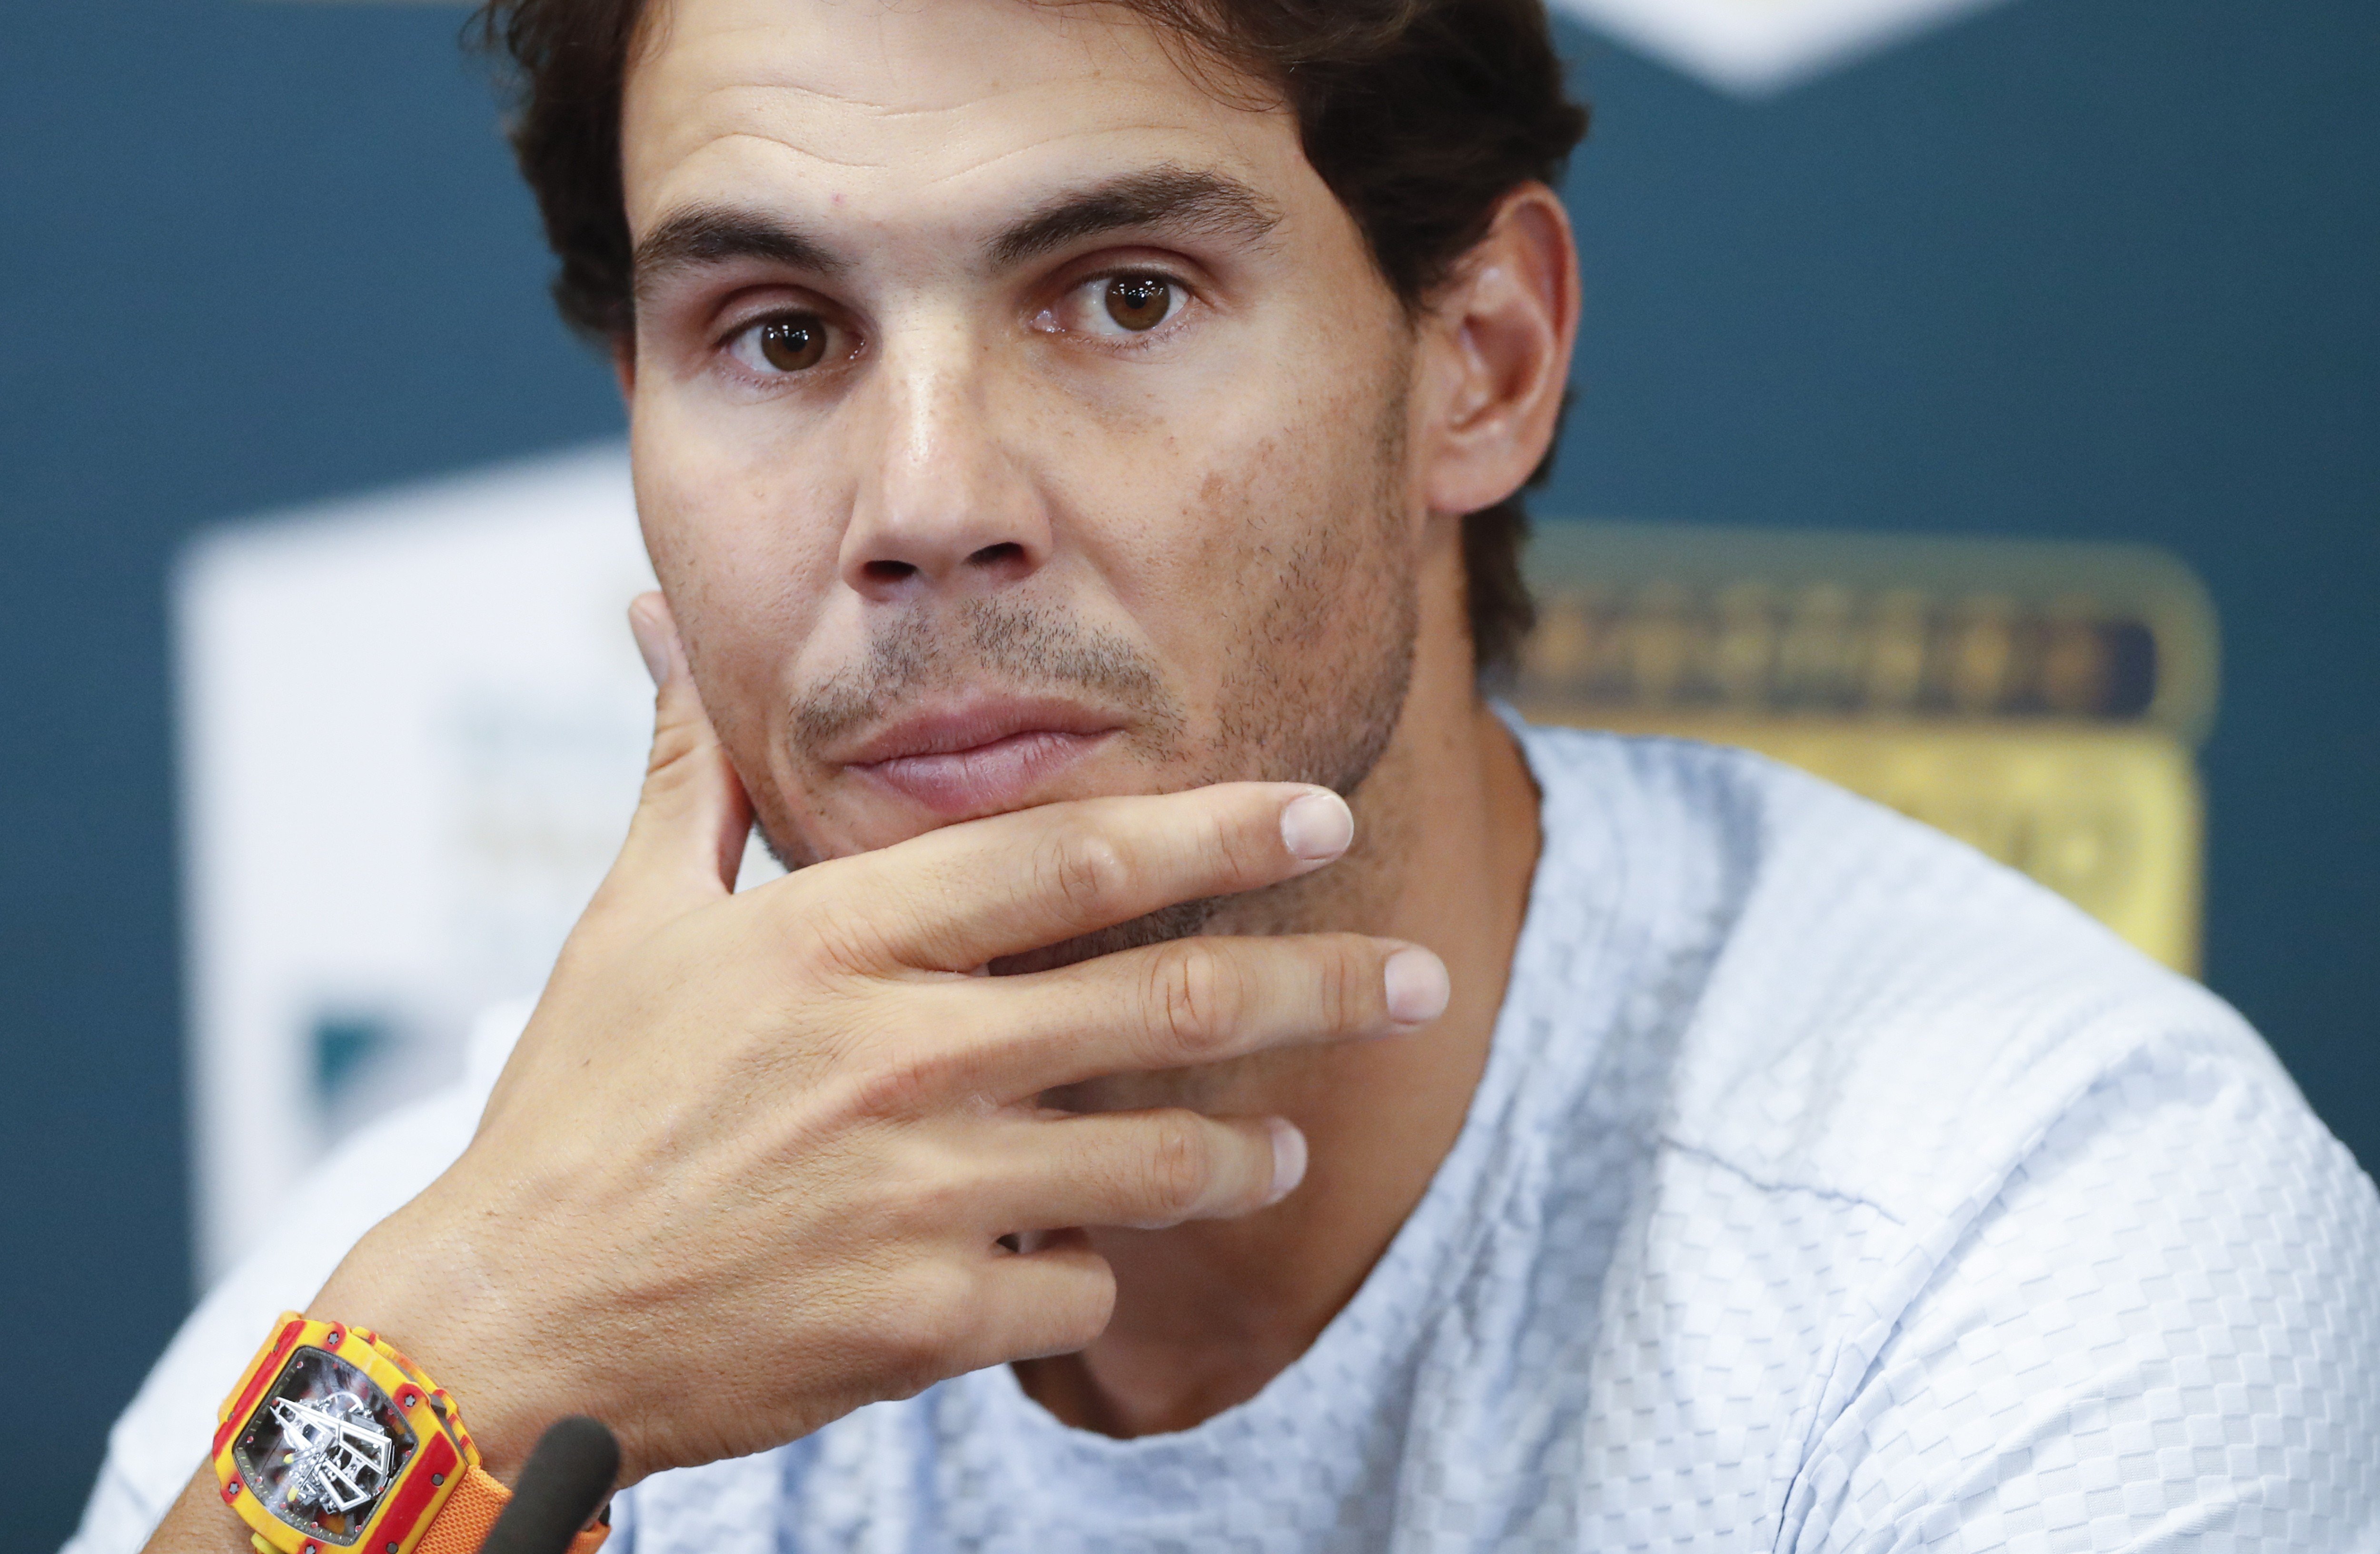 Rafael Nadal wearing Richard Mille’s RM 27-03 watch – a celebrity endorsement that makes sense. Photo: EPA